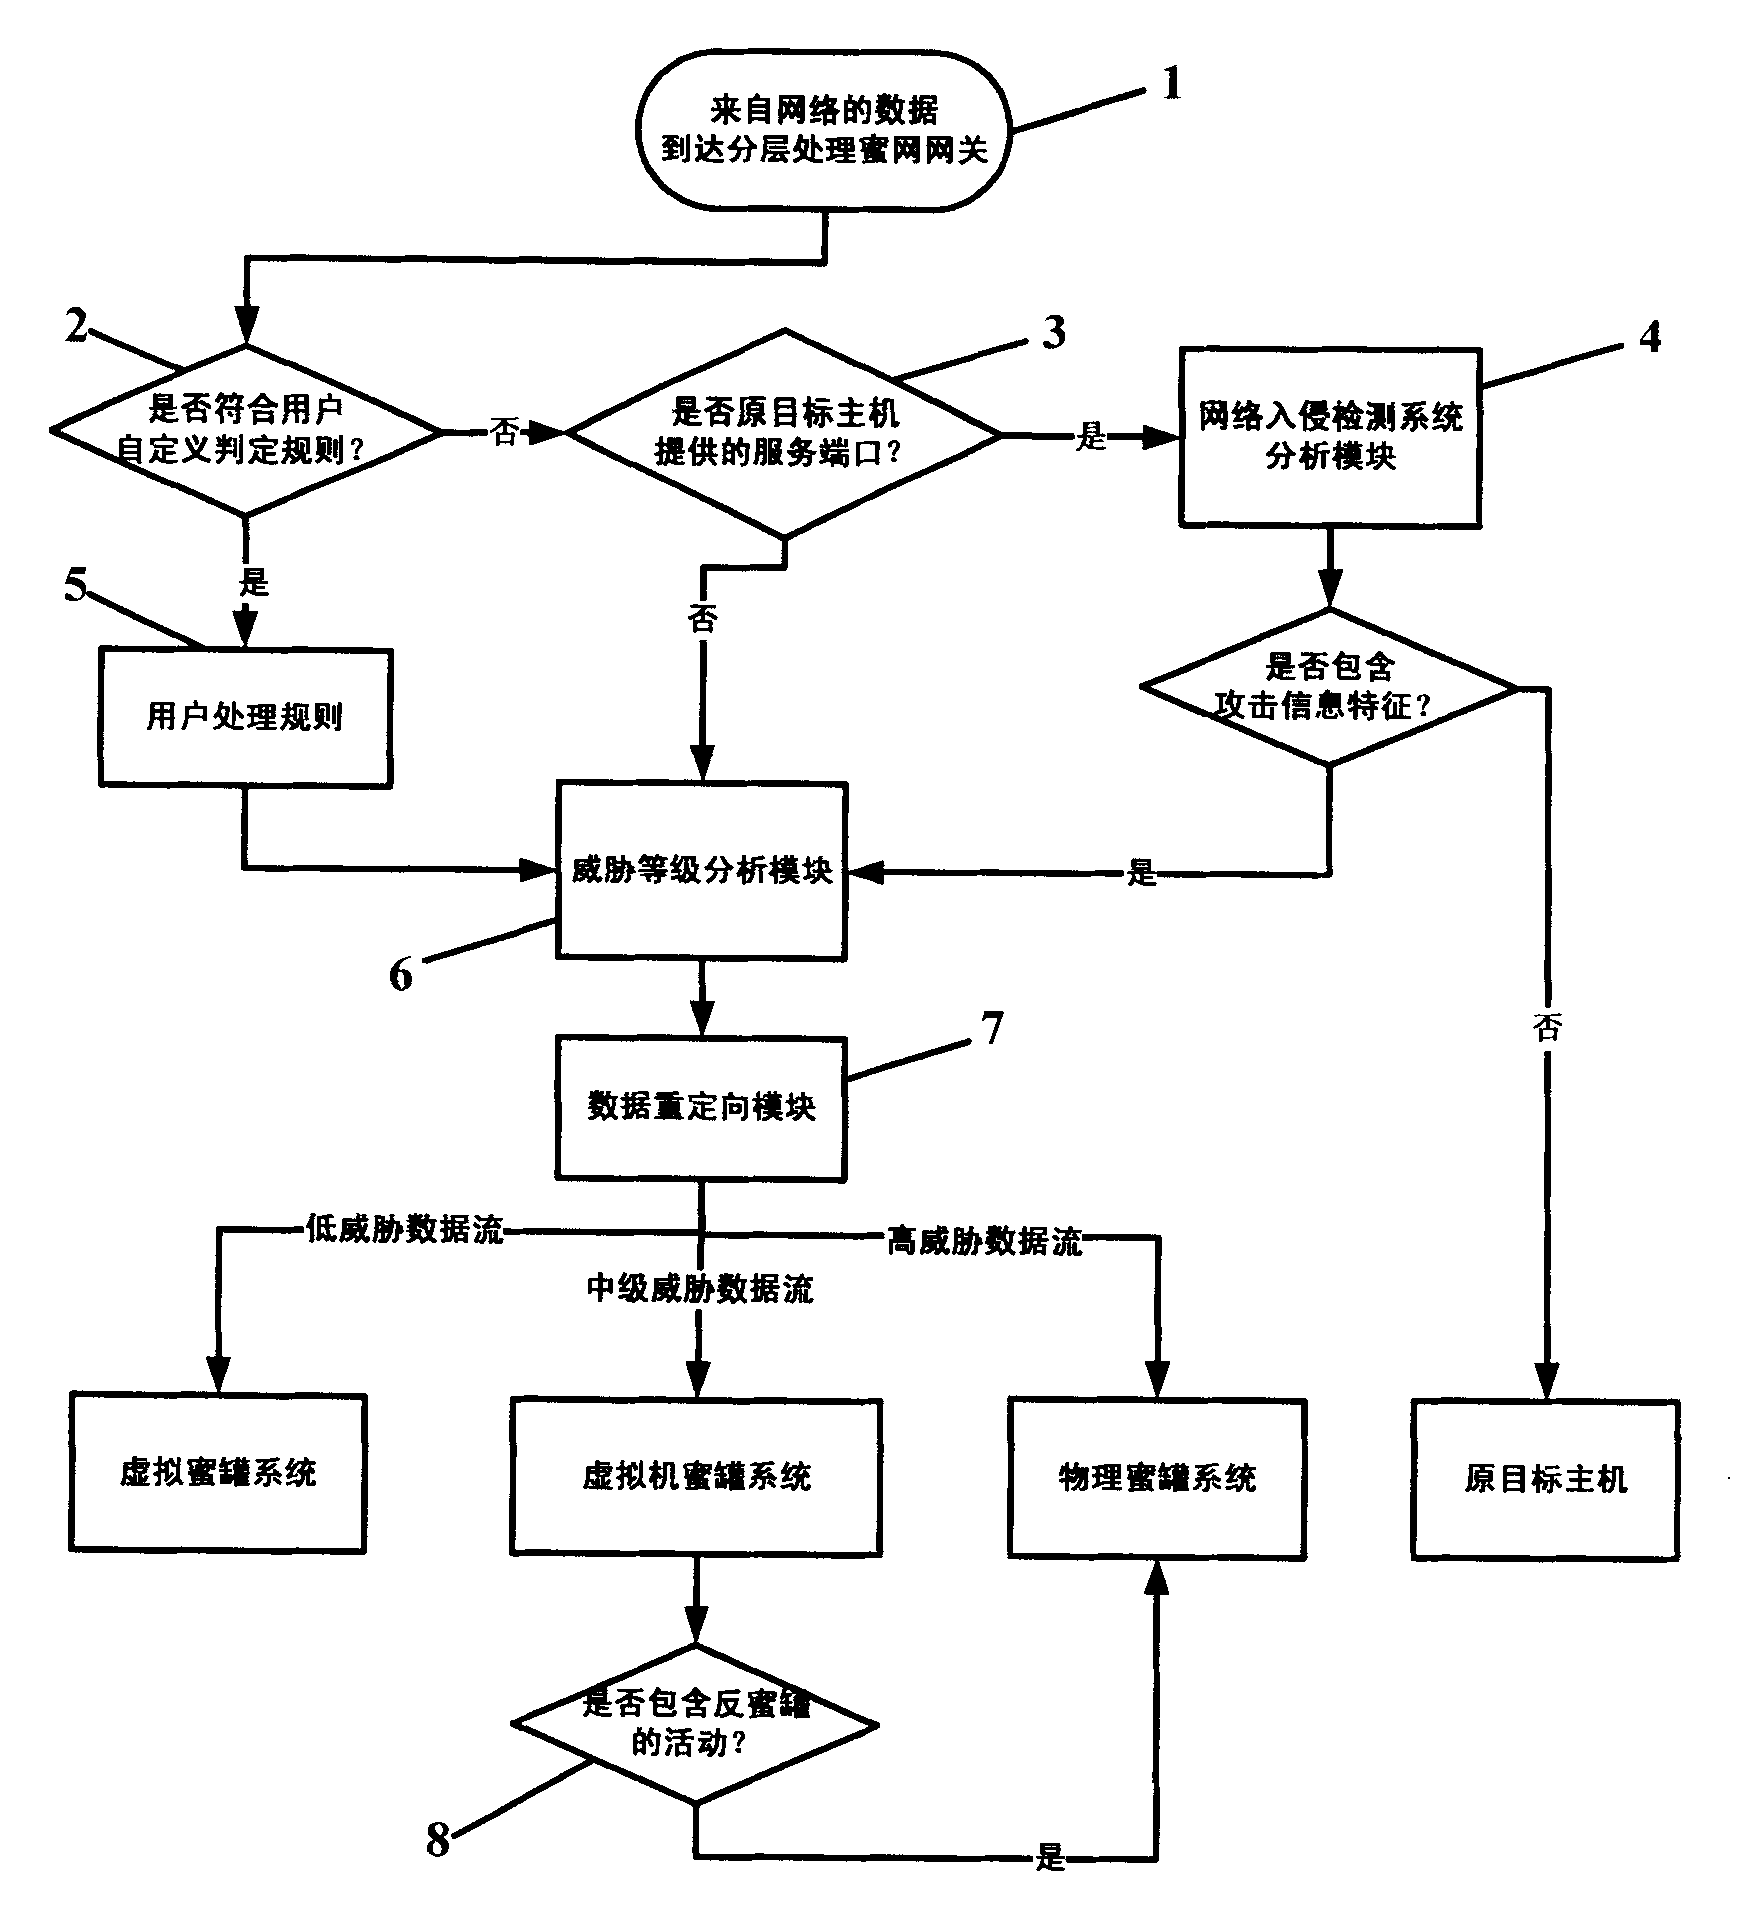 Multi-layer honey network data transmission method and system